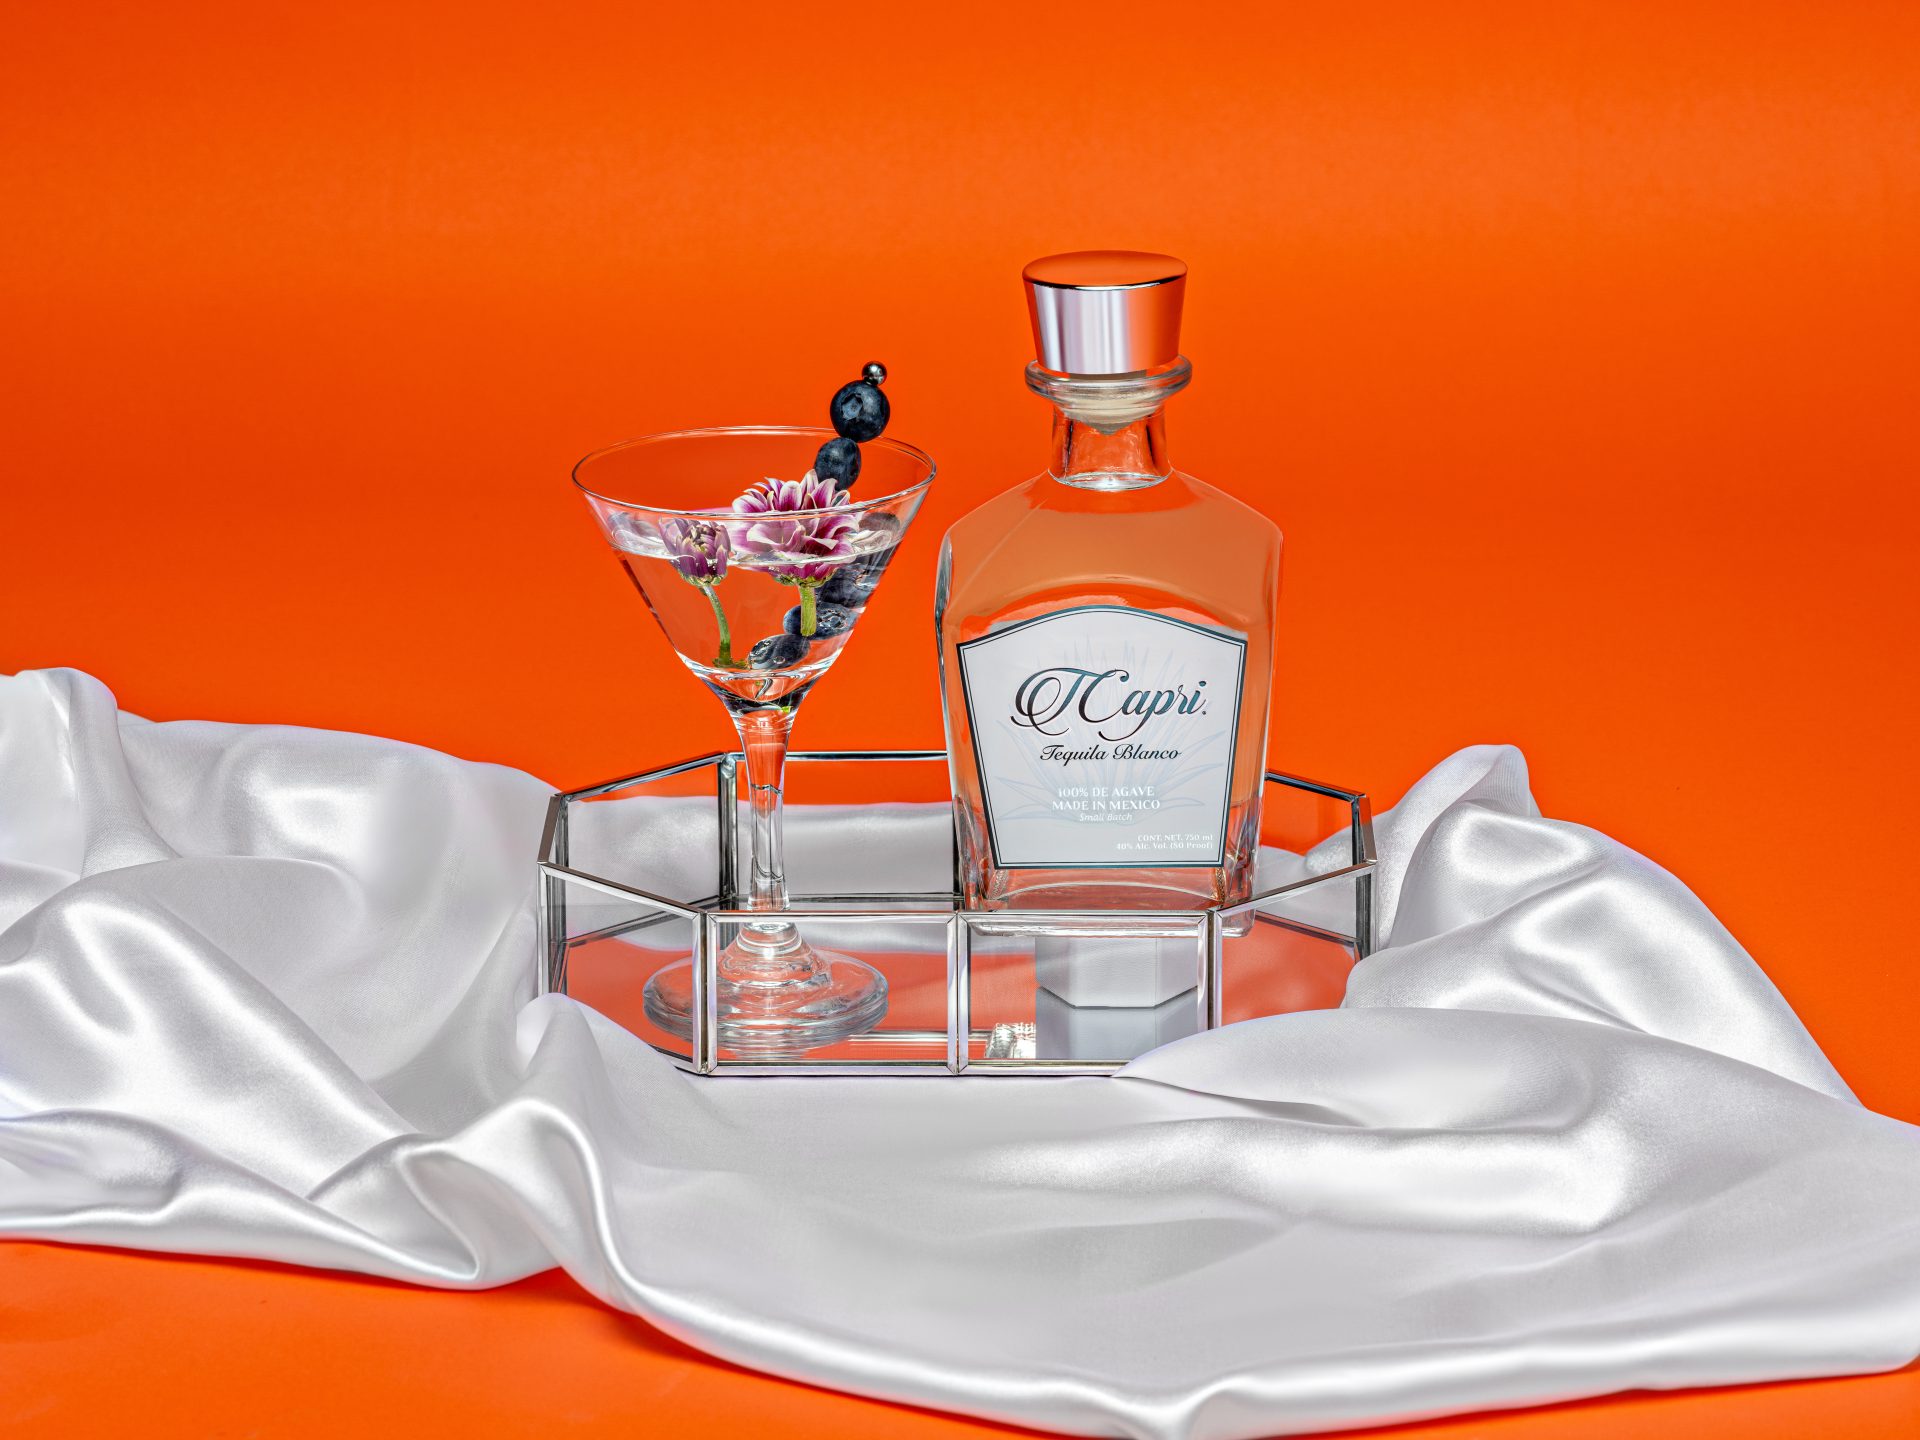 T'Capri tequila blanco with martini glass